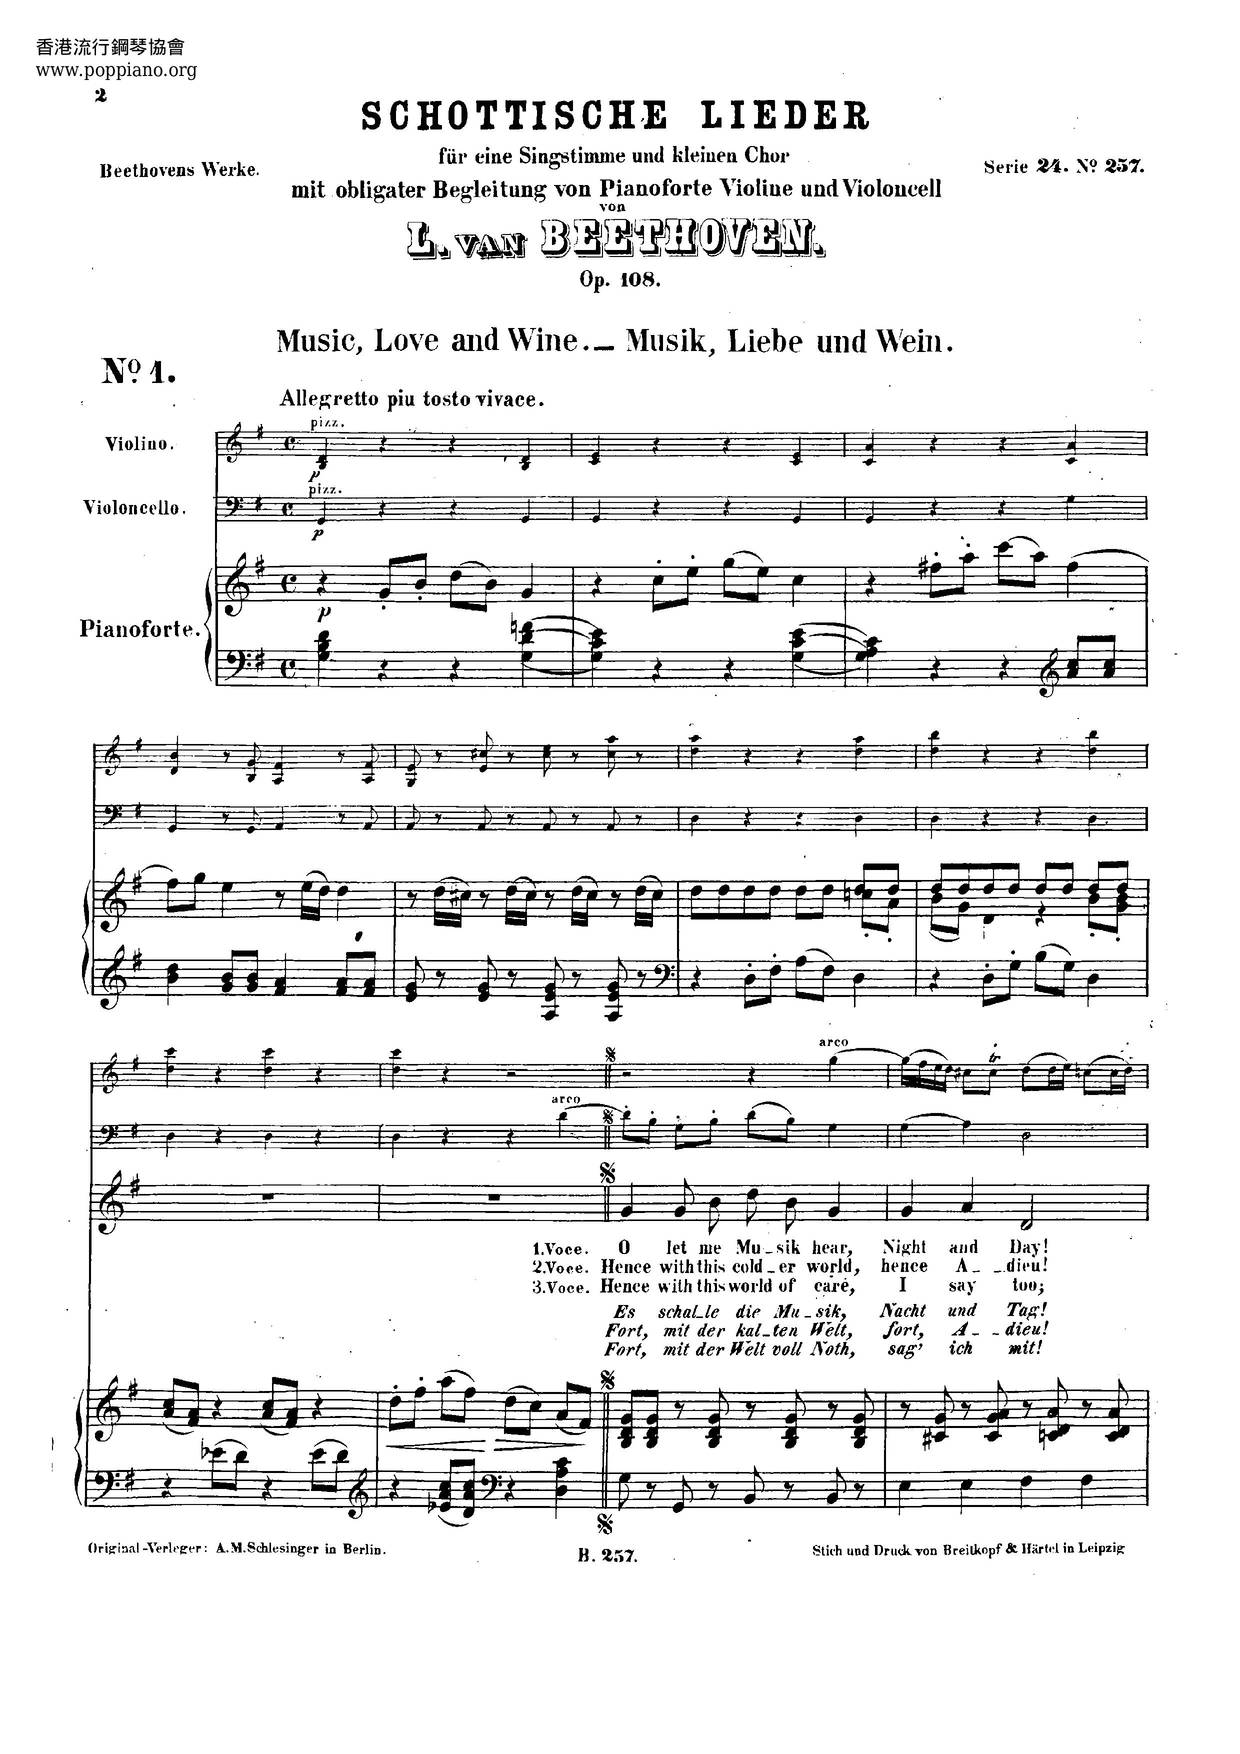 25 Schottische Lieder, Op. 108 Score